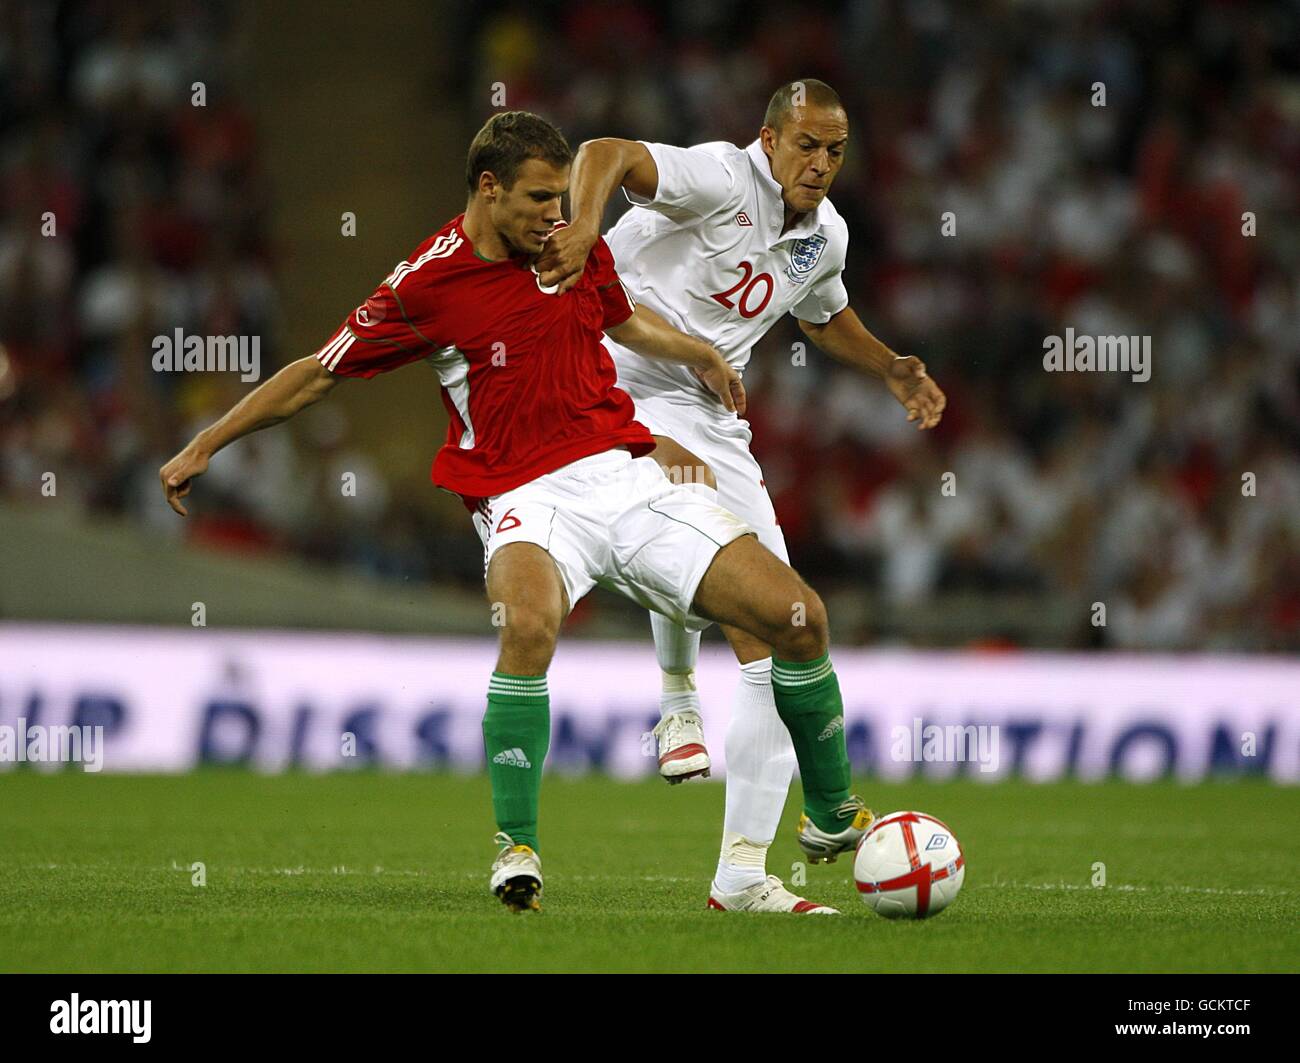 Soccer - International Friendly - England v Hungary - Wembley Stadium. England's Bobby Zamora (right) and Hungary's Krisztian Vadocz (left) battle for the ball Stock Photo